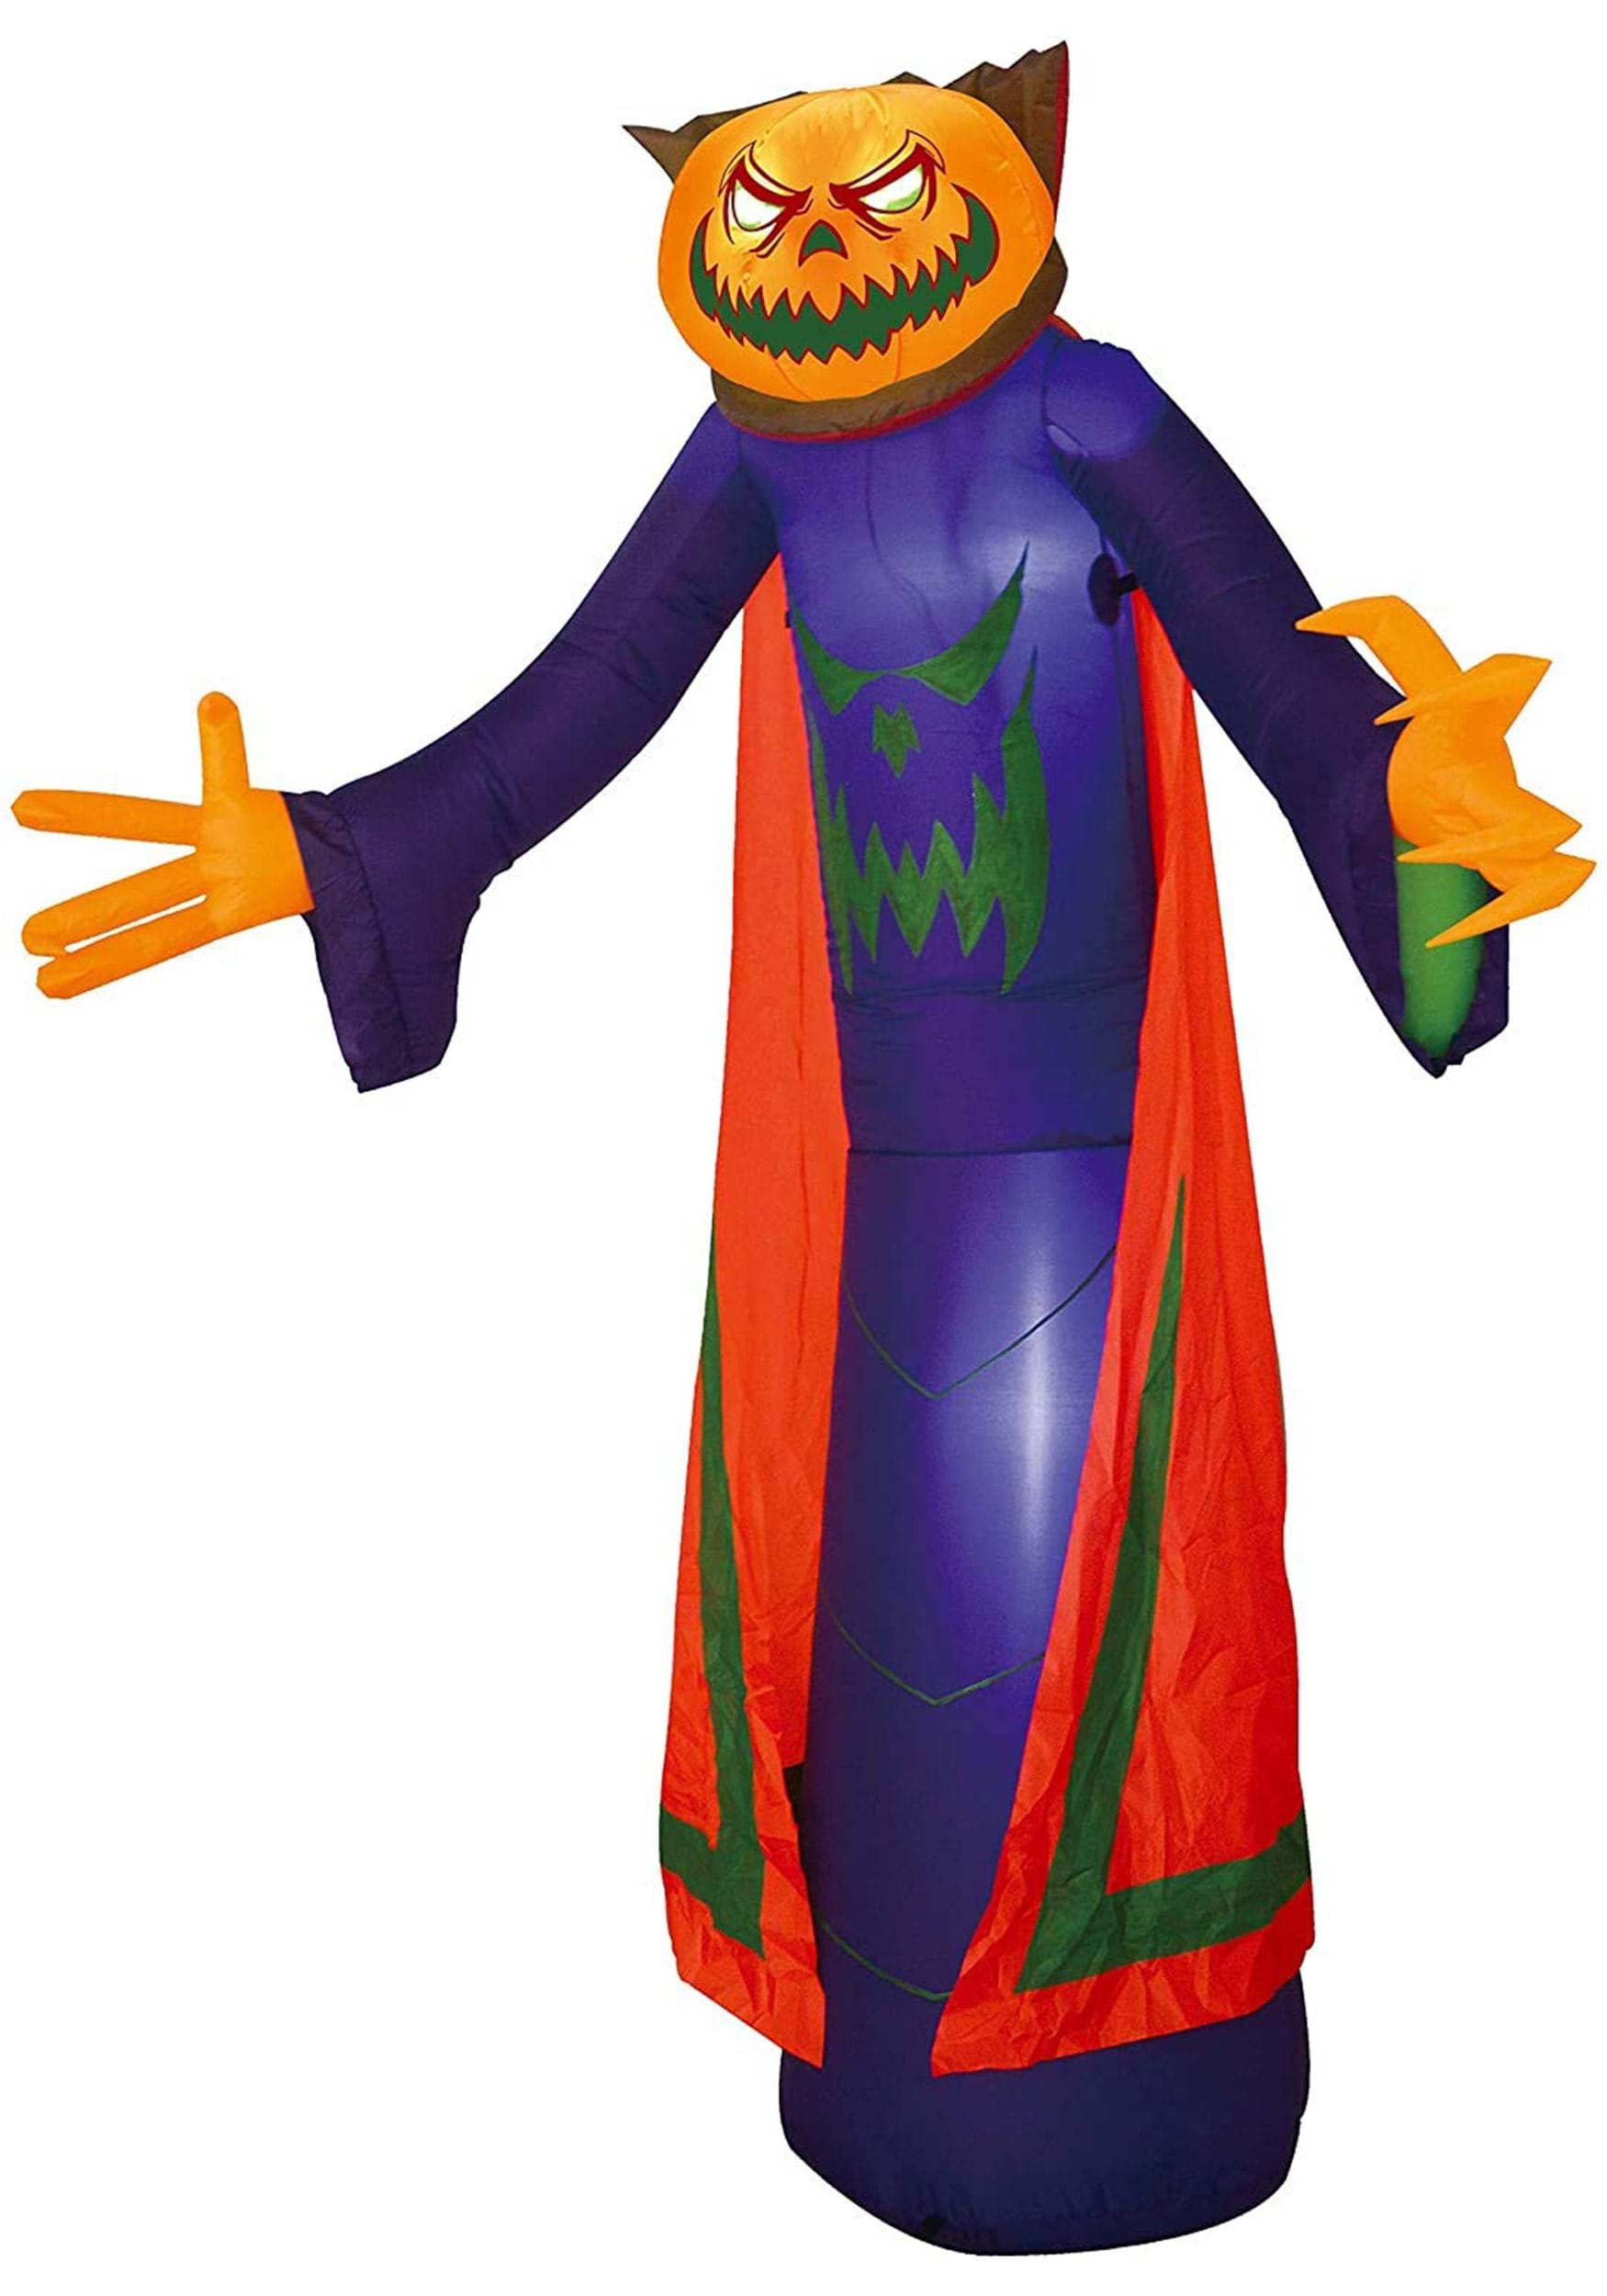 Inflatable 8FT Pumpkin Wizard Halloween Decoration